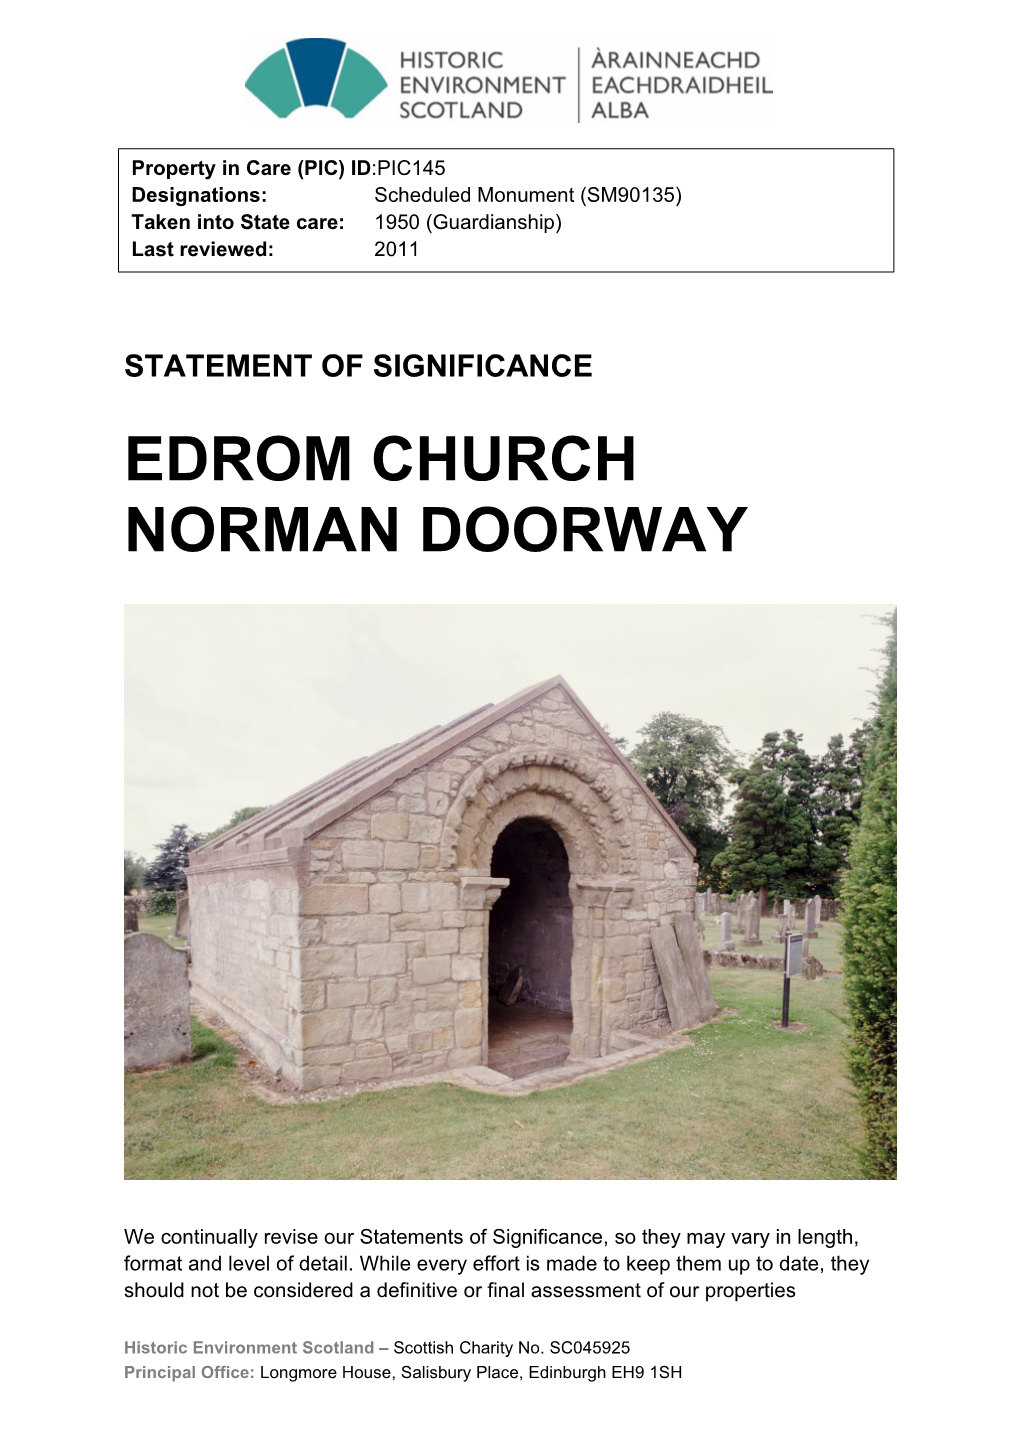 Edrom Church Norman Doorway Statement of Significance